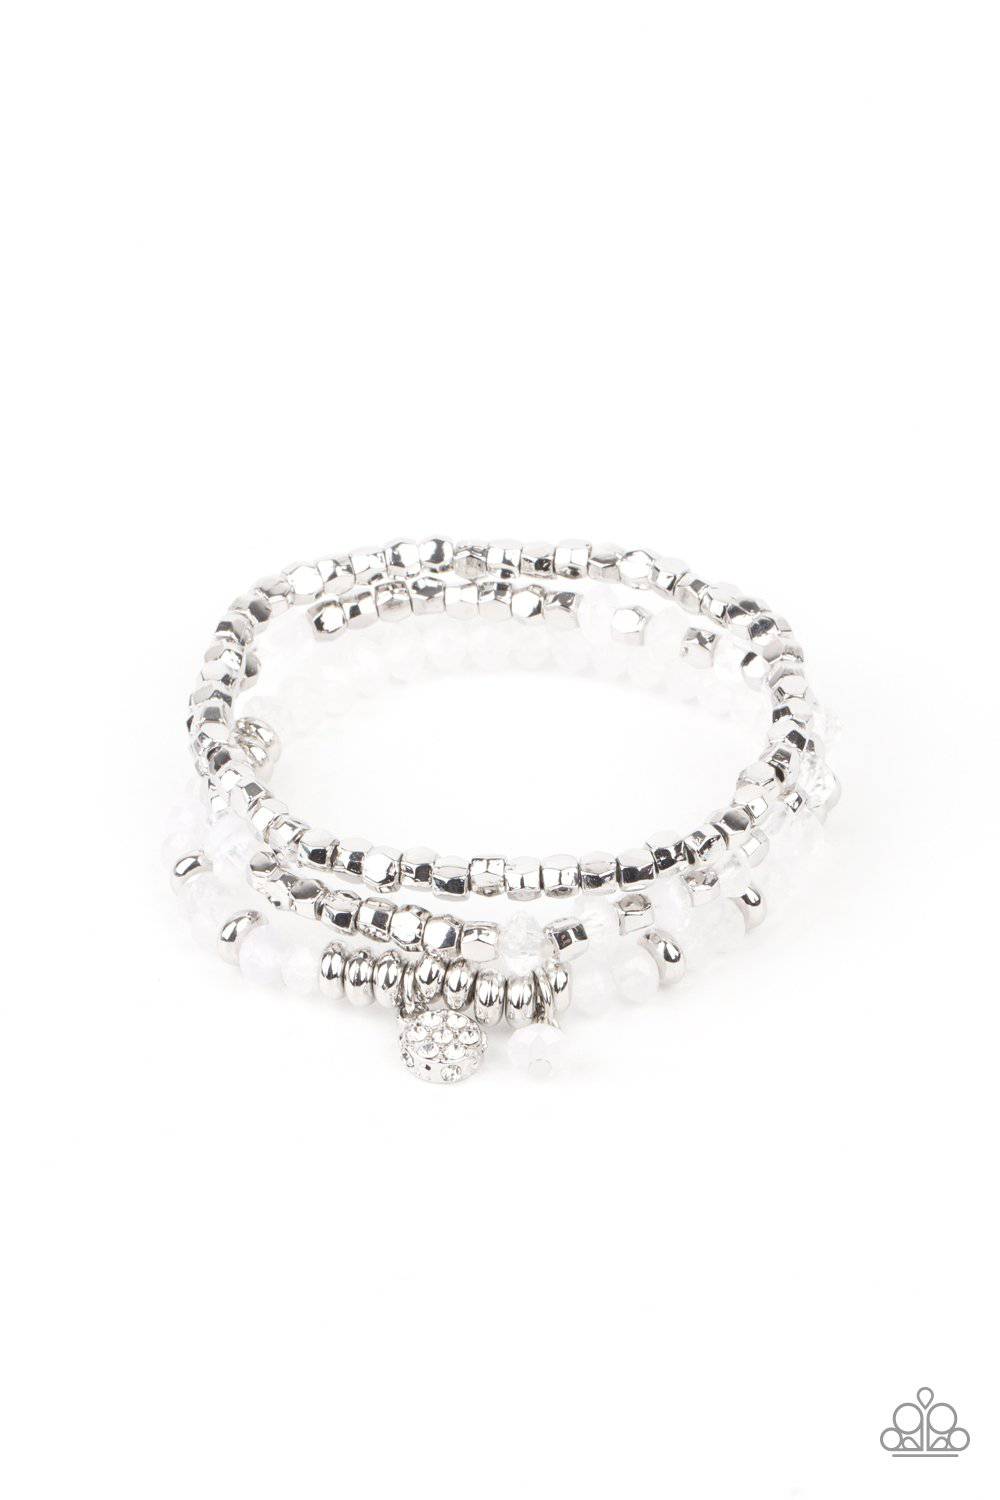 Glacial Glimmer - White Beads Bracelet - Paparazzi Accessories - GlaMarous Titi Jewels